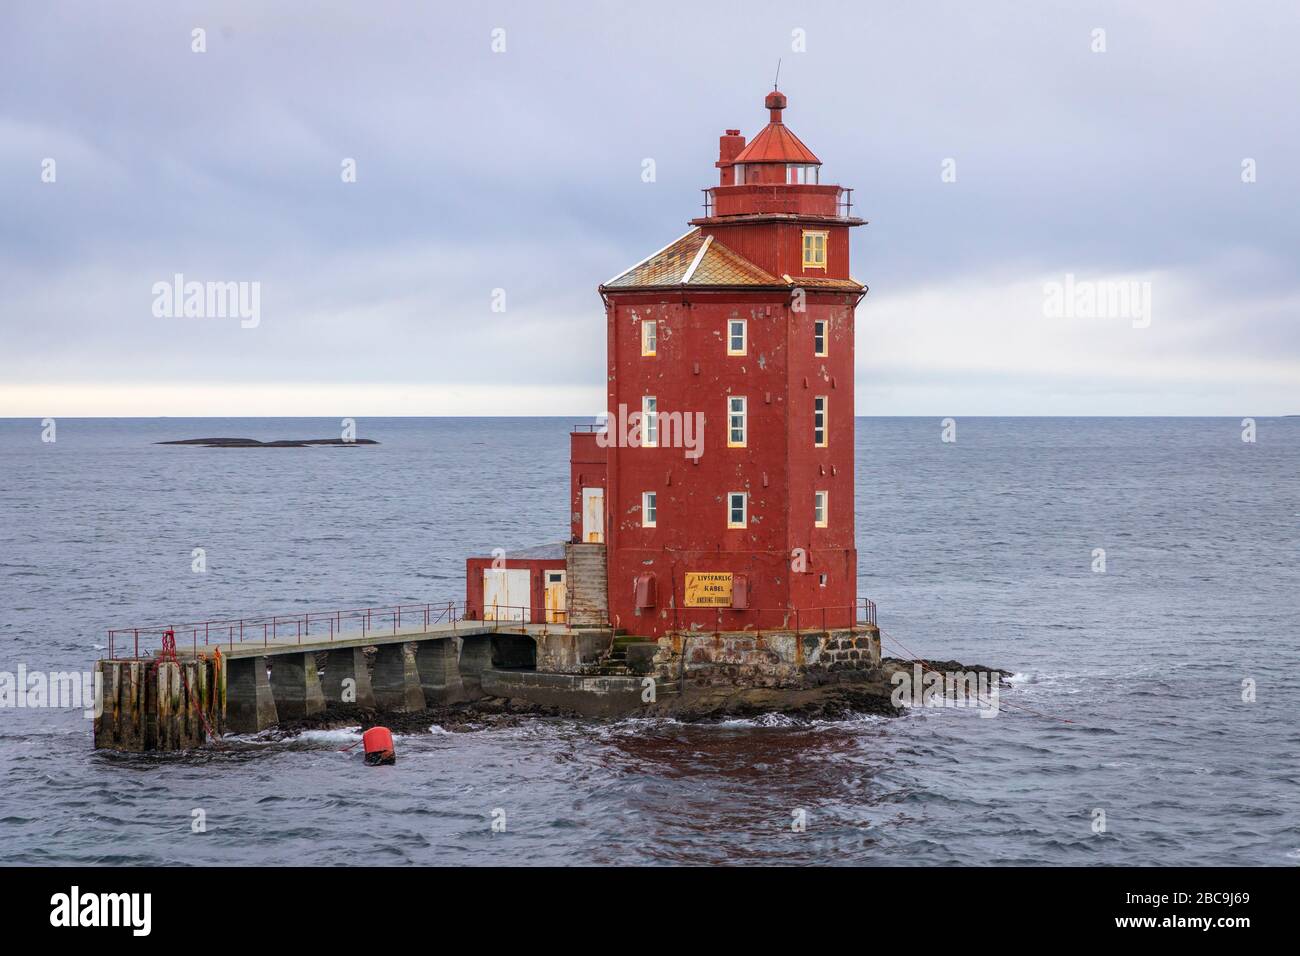 Très vieux phare octogonal Kjeungskjær FYR en mer de Norvège Banque D'Images